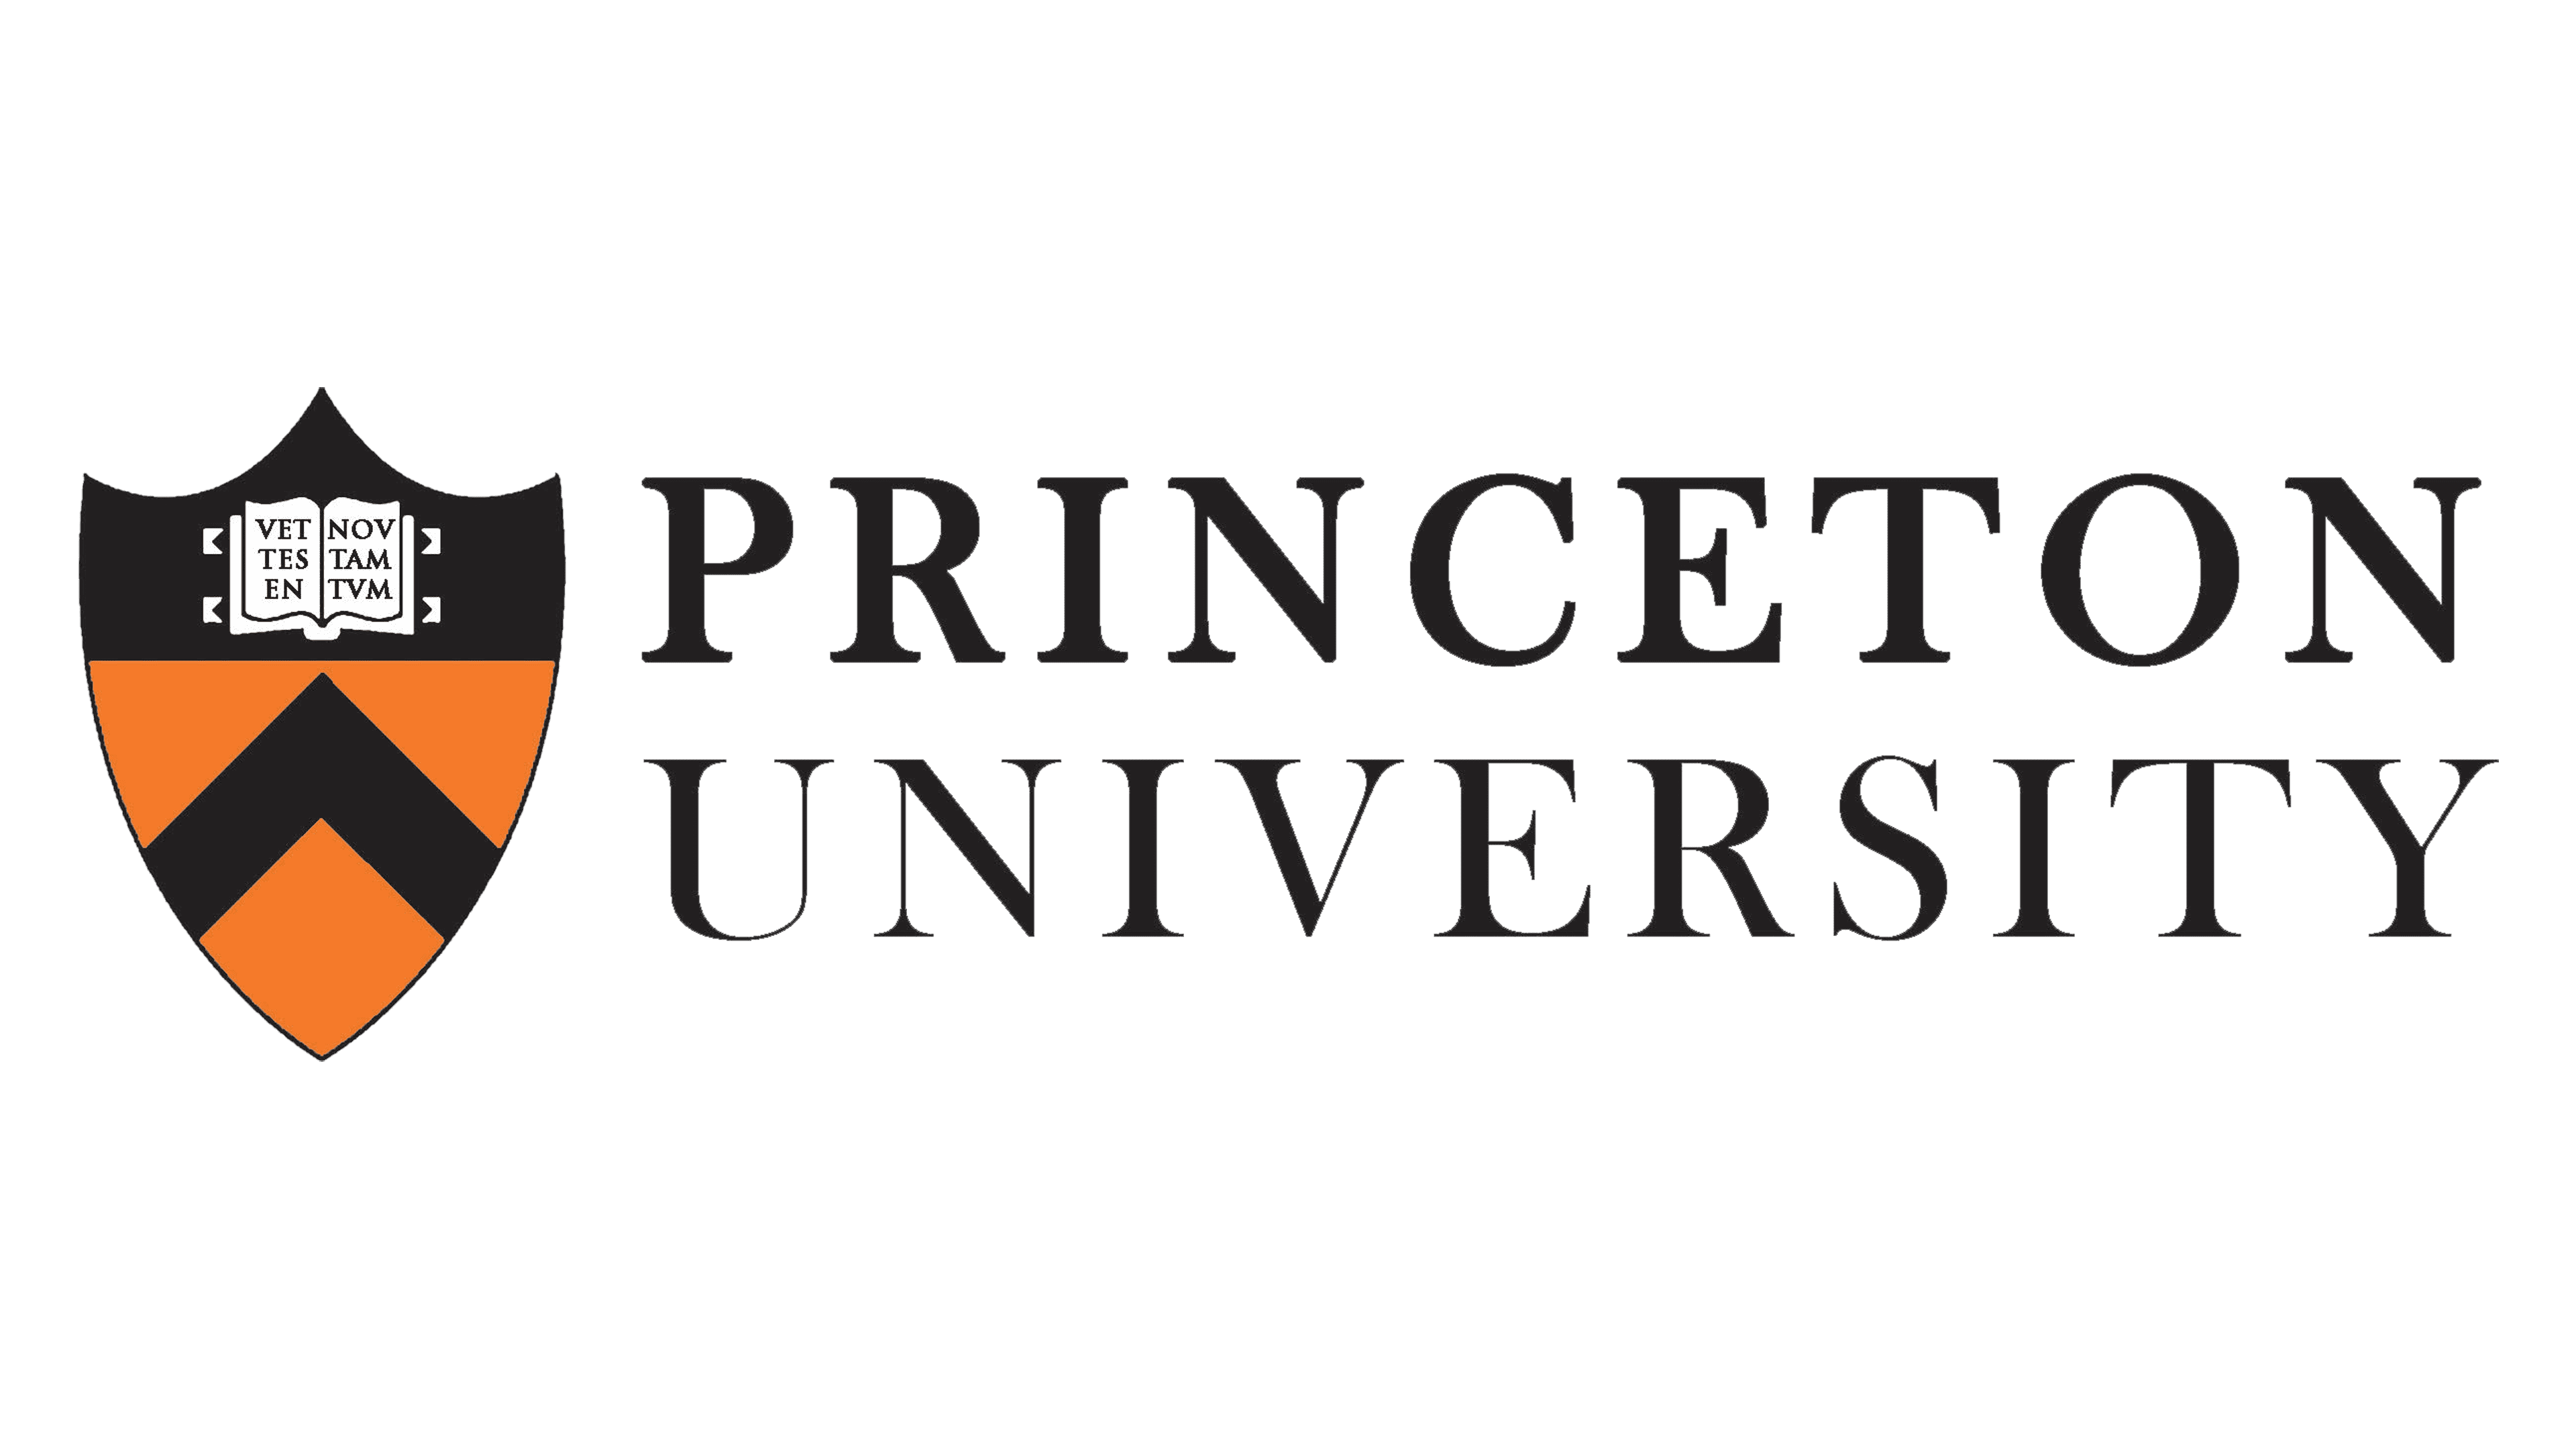 University-of-Princeton